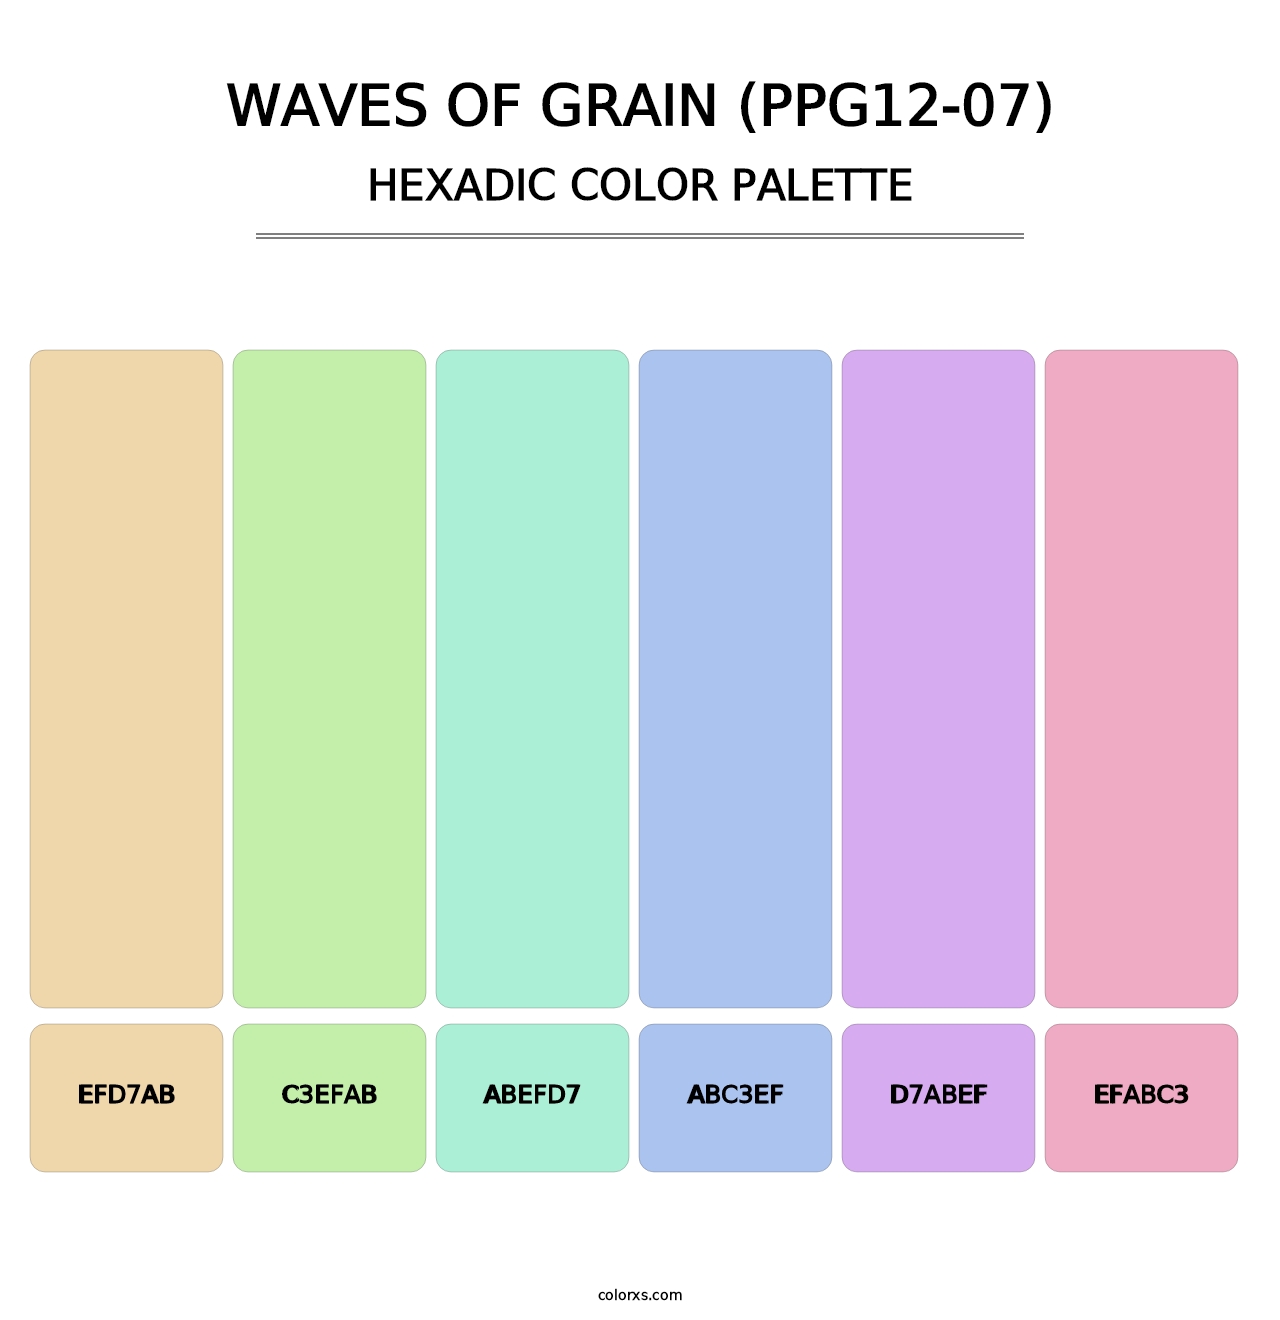 Waves Of Grain (PPG12-07) - Hexadic Color Palette